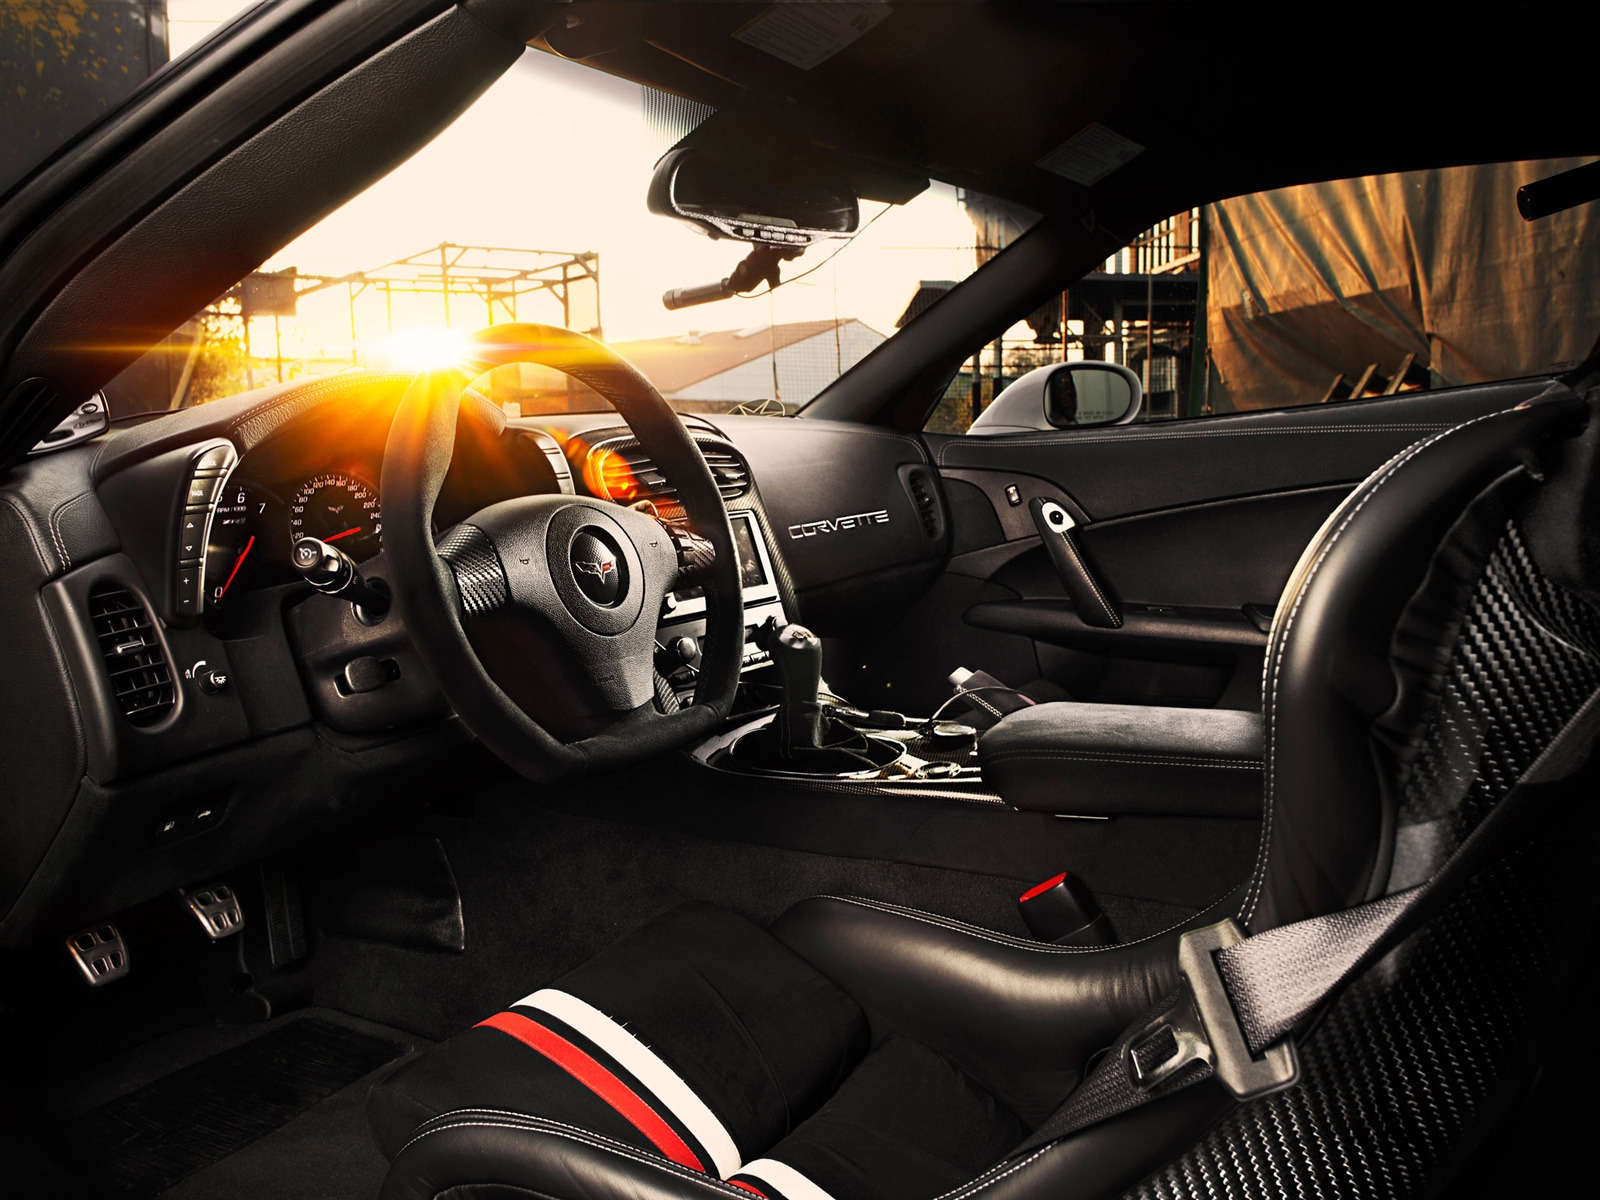 TIKT Corvette C6 ZR1 Interior for 1600 x 1200 resolution